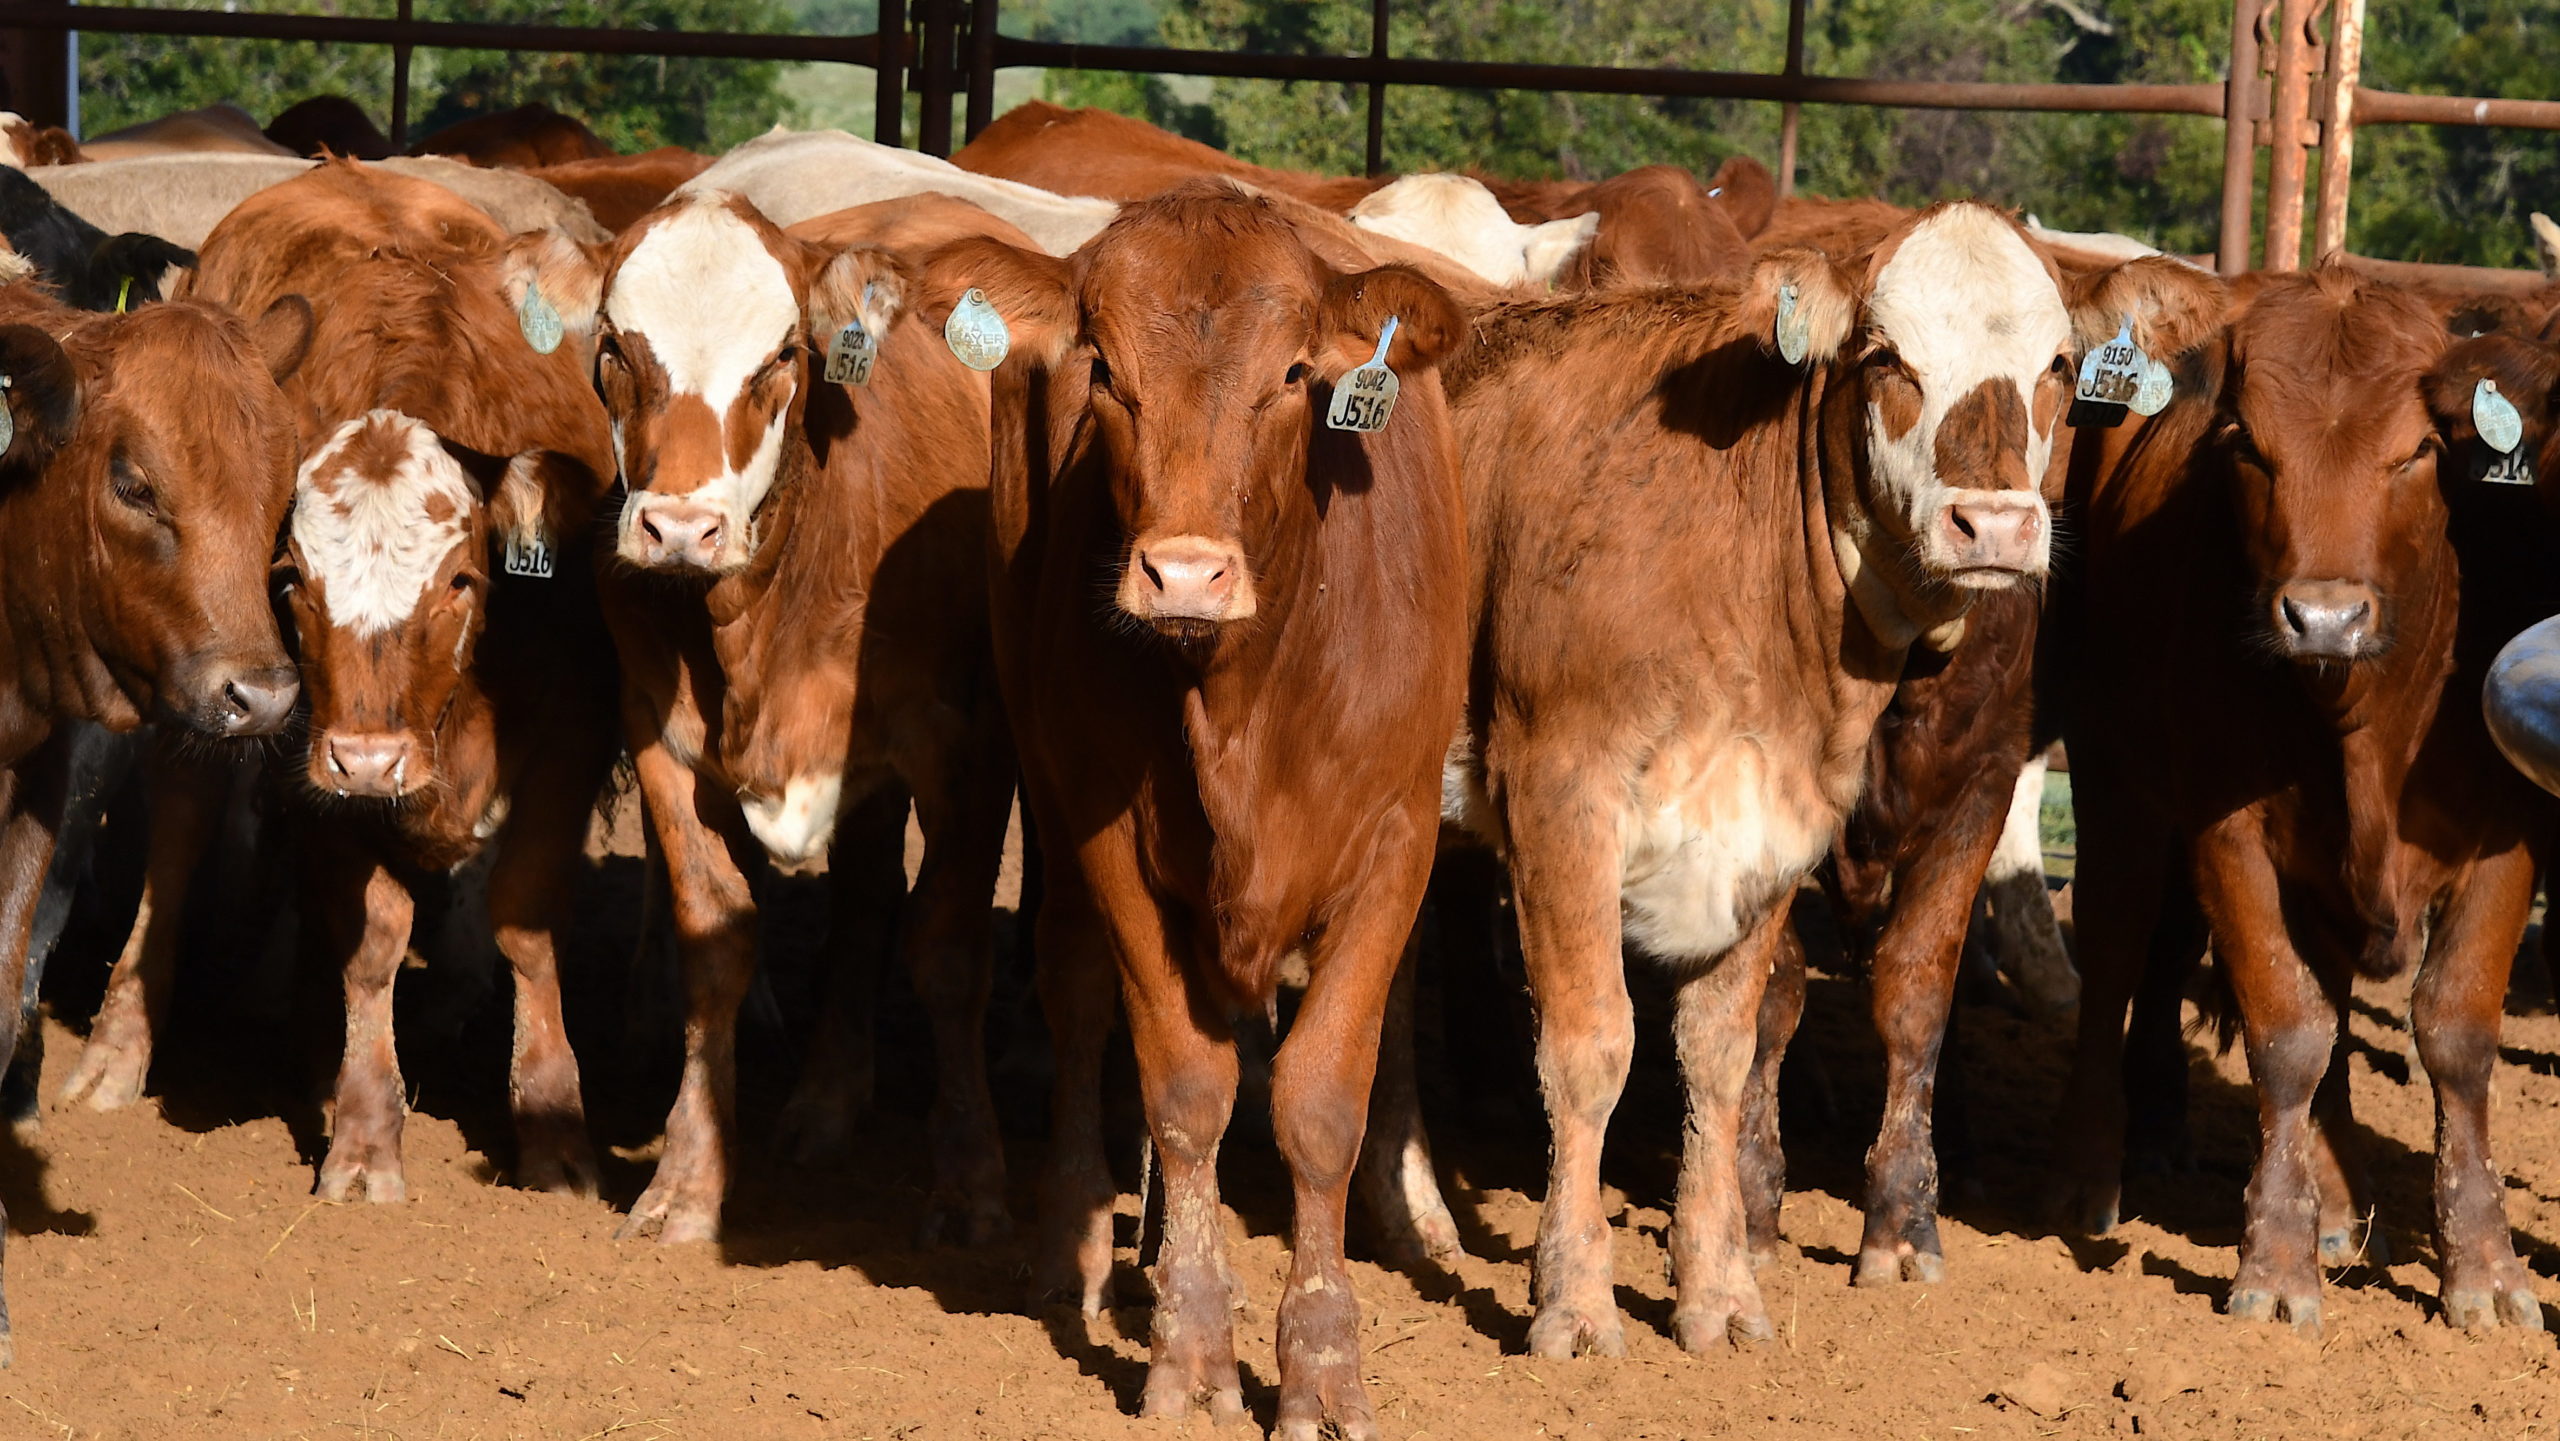 Beef 706 program Aug. 8-9 helps cattle producers enhance economic viability